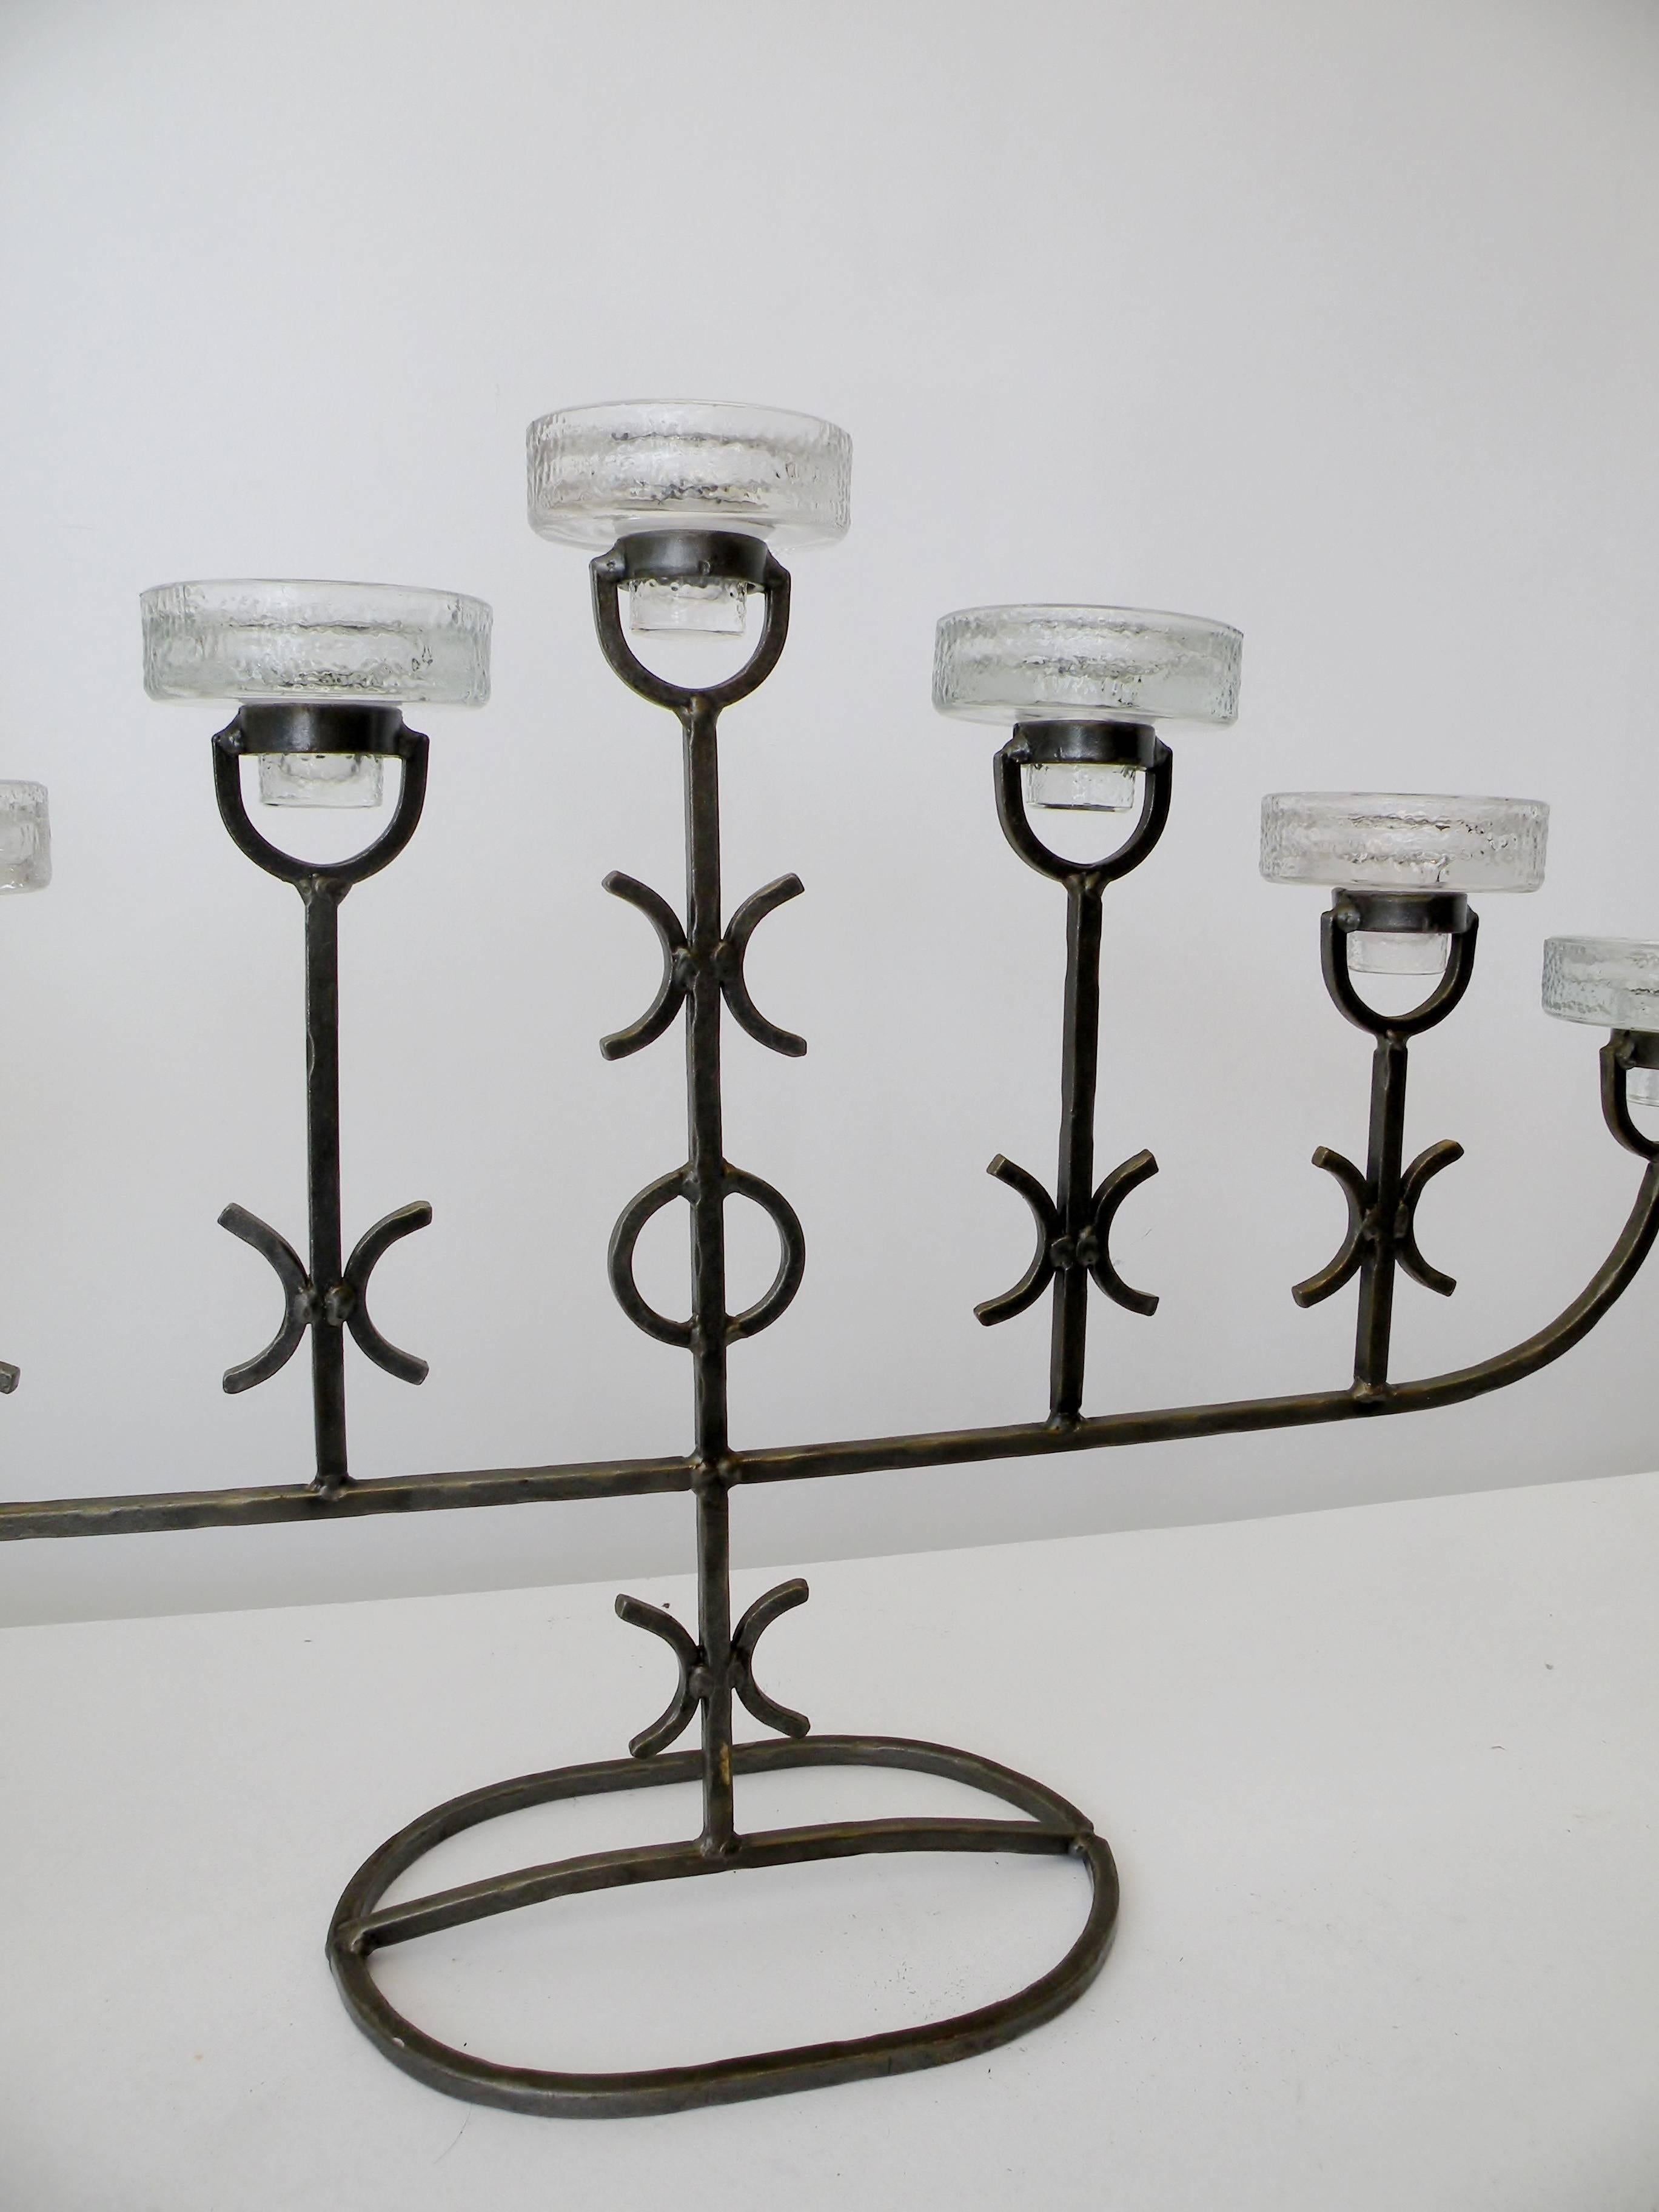 Scandinavian modernist seven-light freestanding candelabra designed by Erik Hoglund for Boda Nova Glassworks and by Axel Stromberg metalworks Sweden. Glass candle holders are 6.5